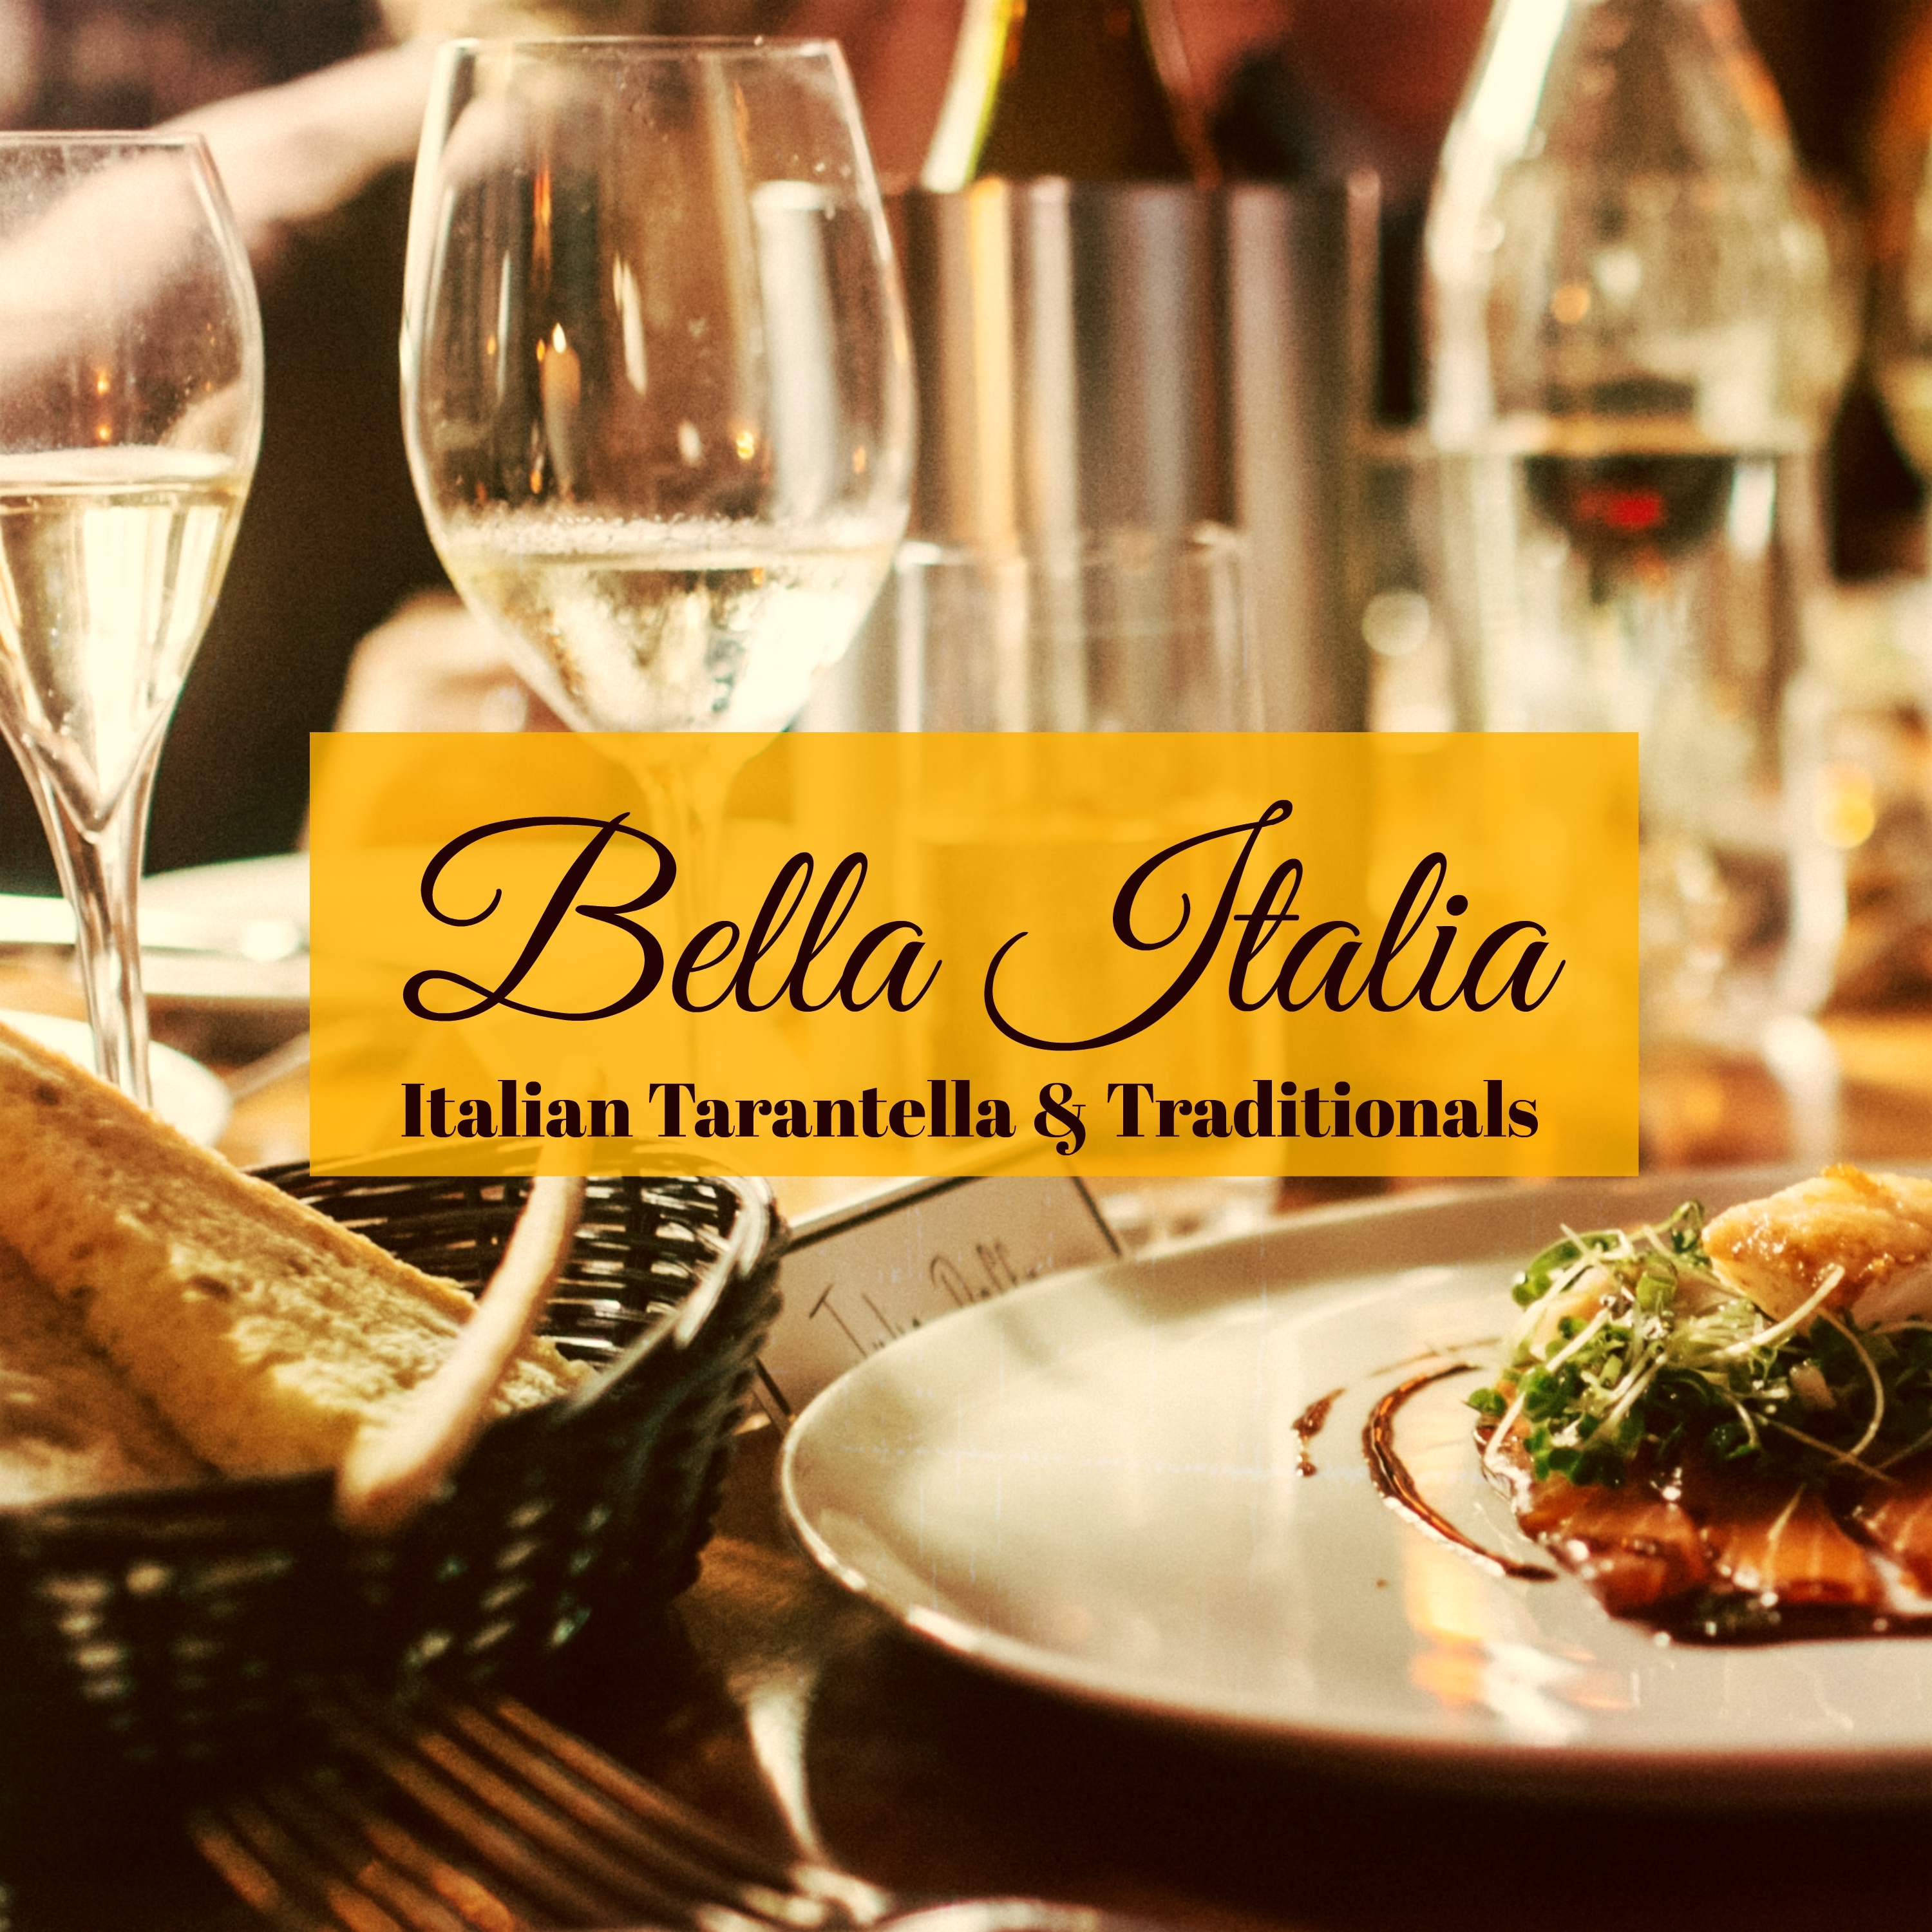 Bella Italia, Italian Tarantella  Traditionals  Instrumental Italian Music for Italian Restaurant in Little Italy, New York City Manhattan